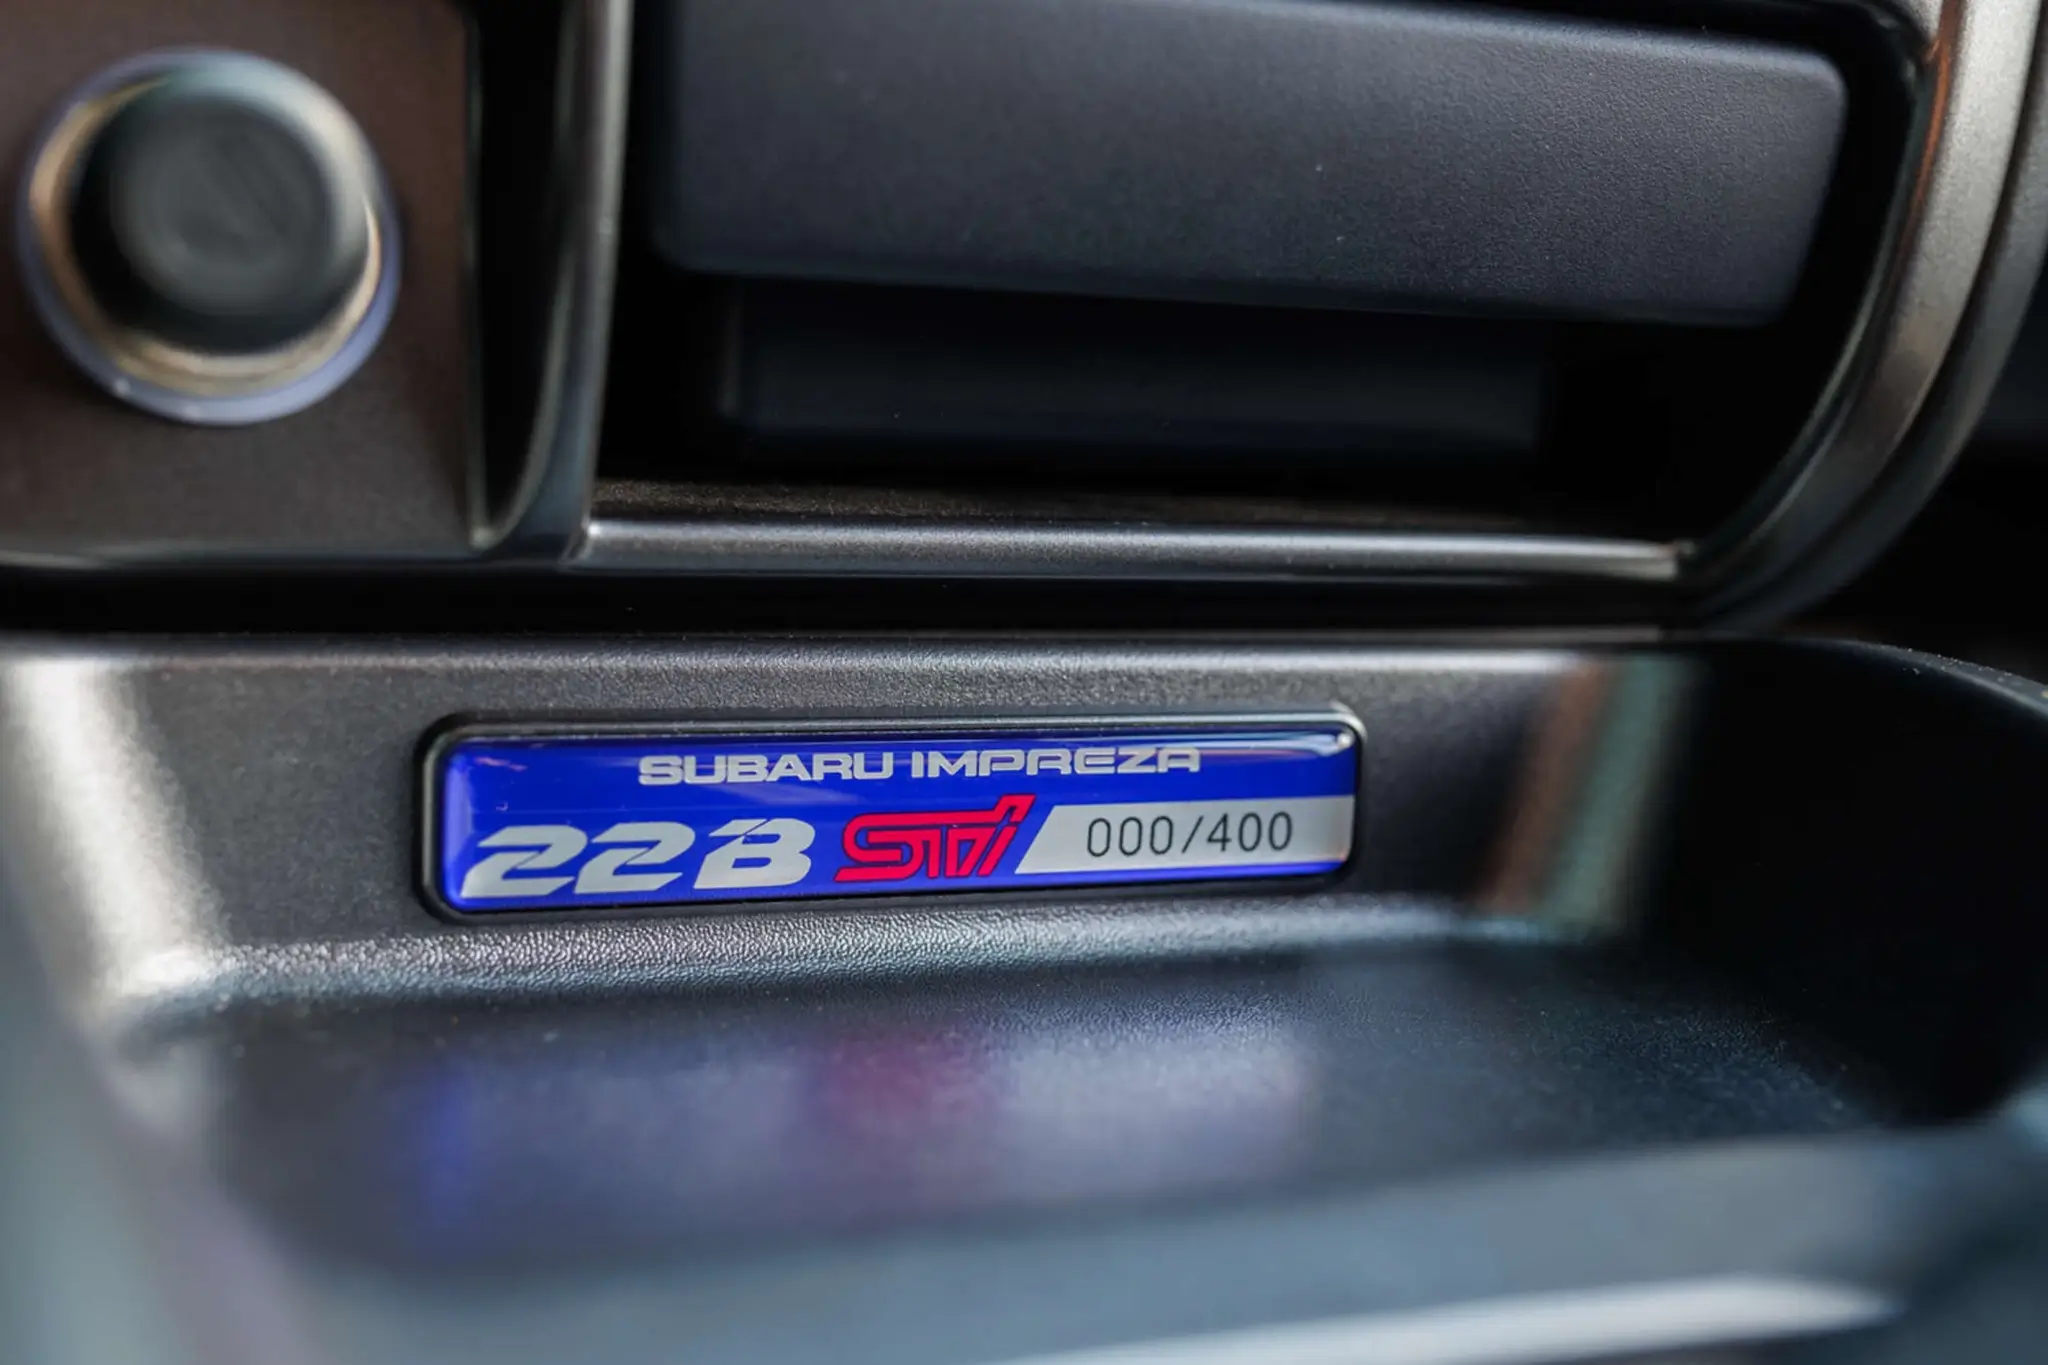 Subaru Impreza 22B STi de Colin McRae - número de série